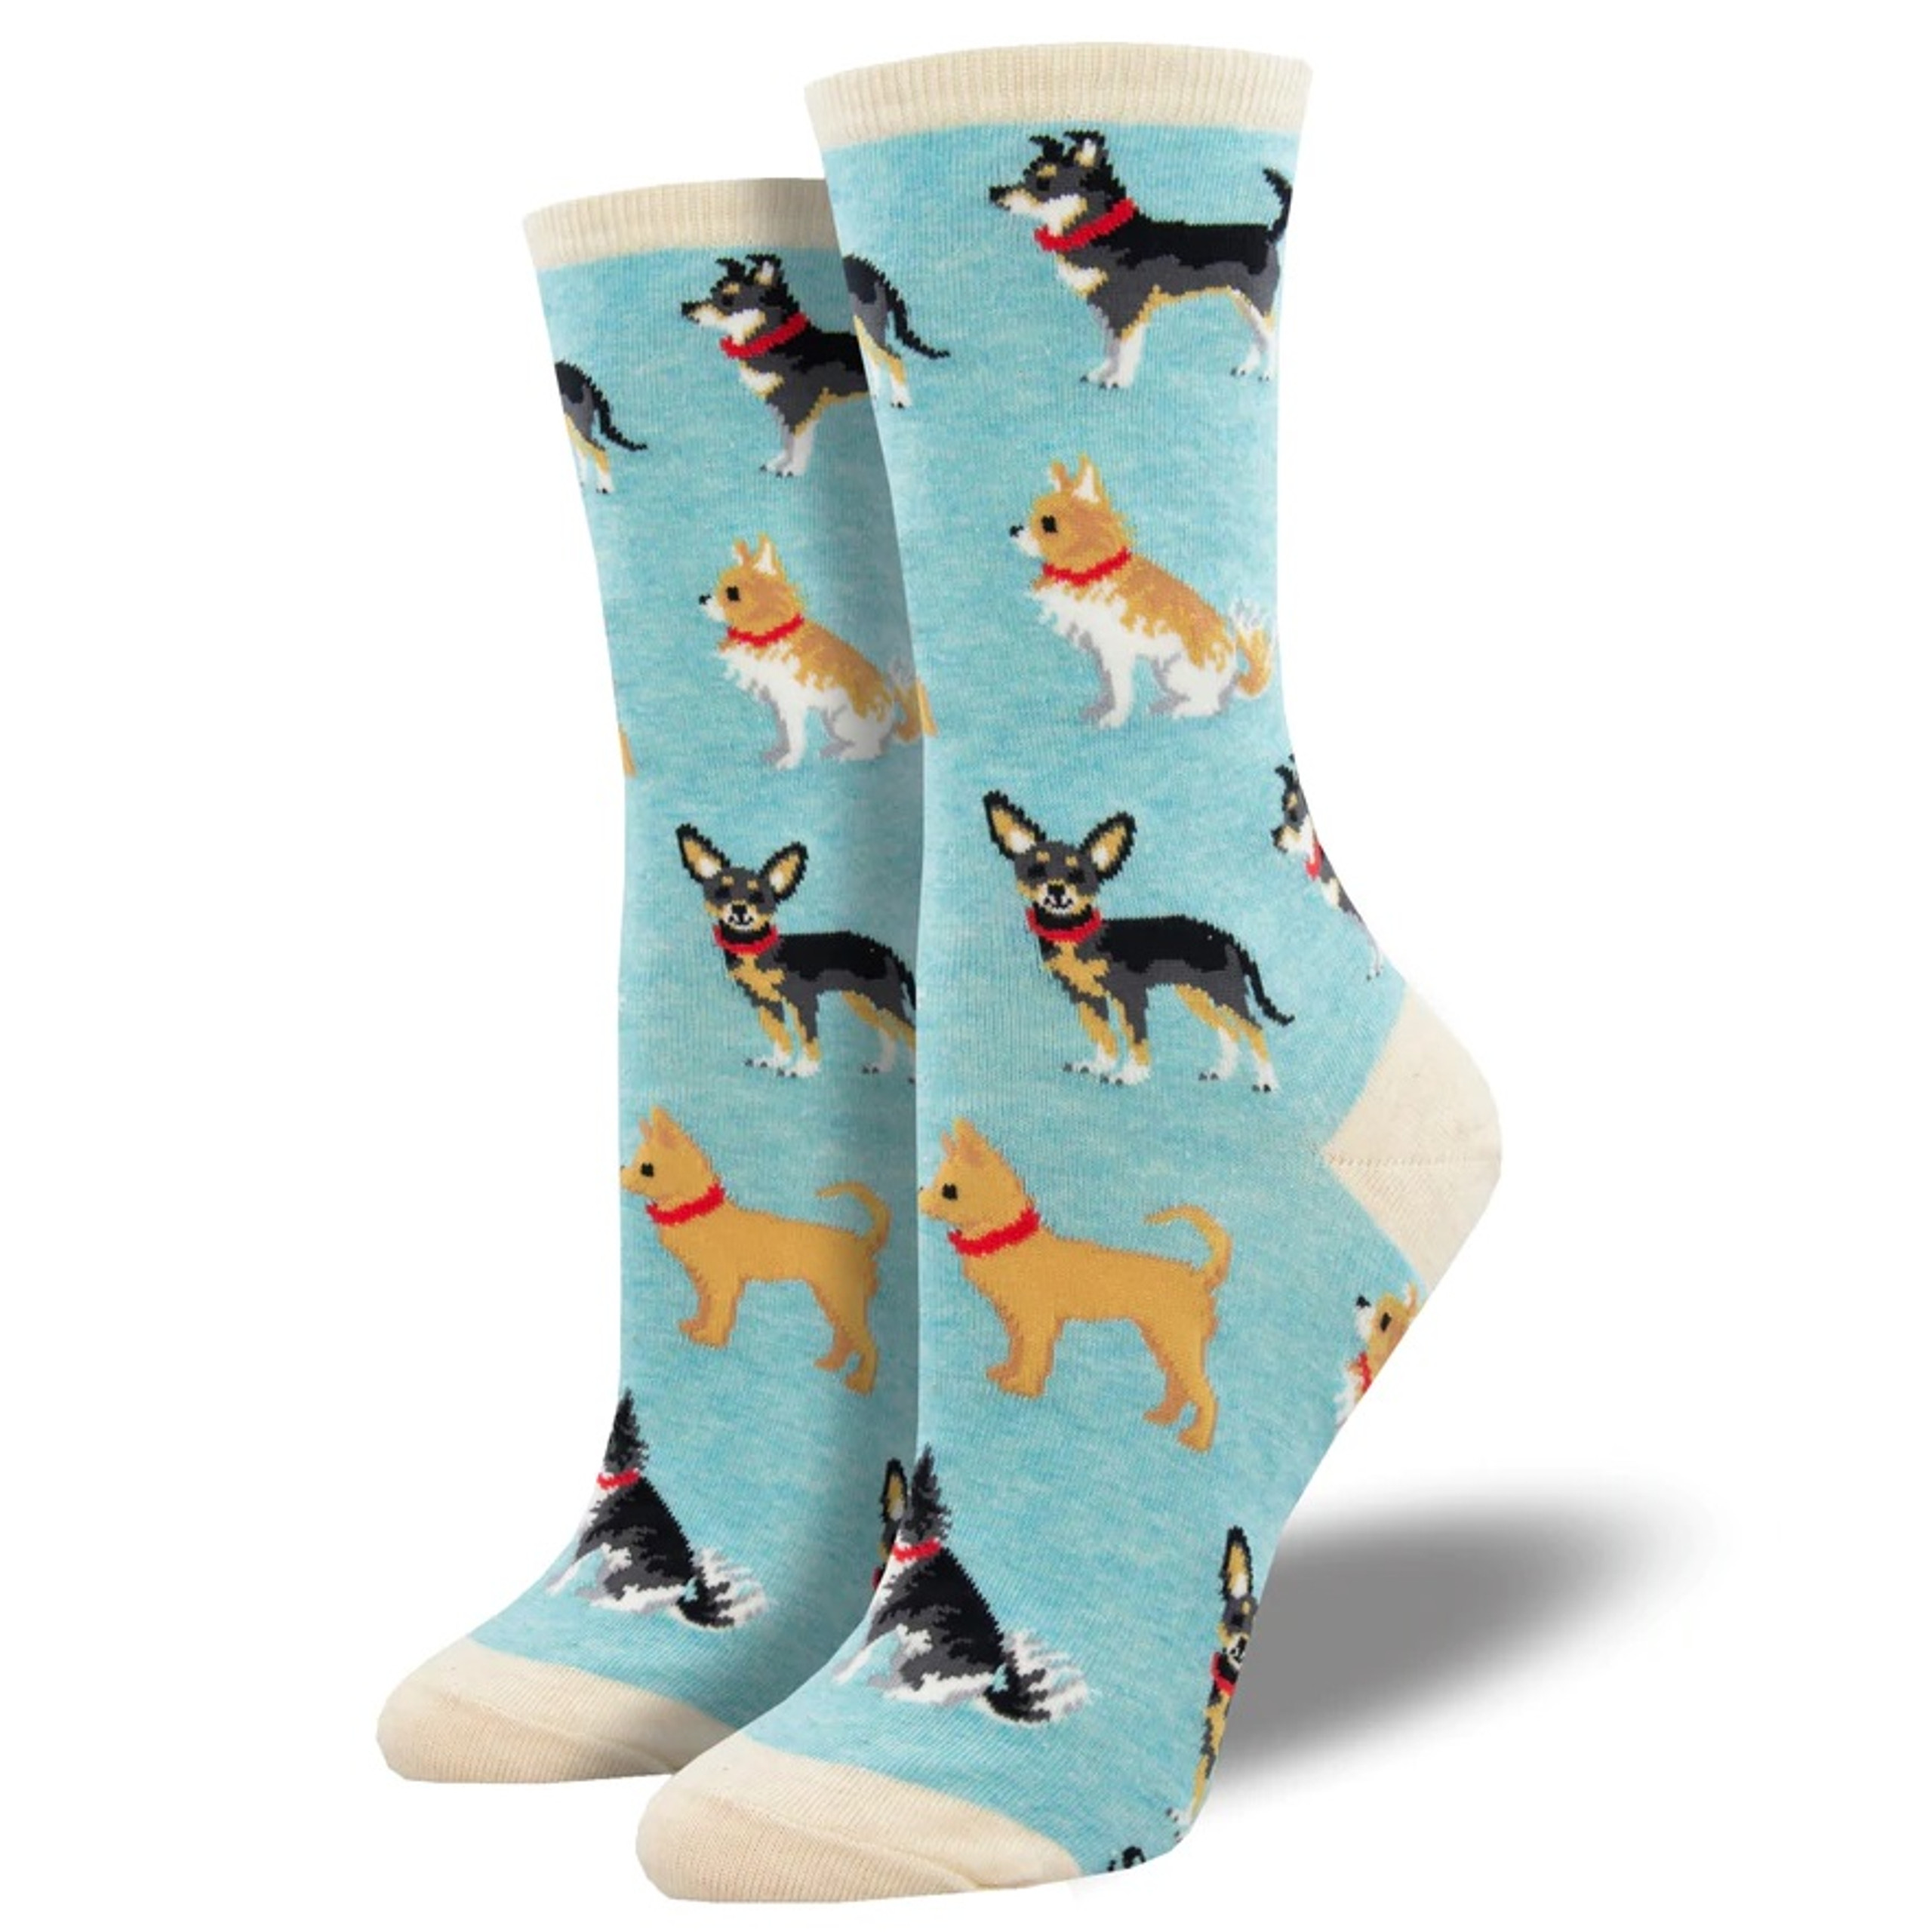 Doggy Style Women's Socks by Socksmith - RetroFestive.ca